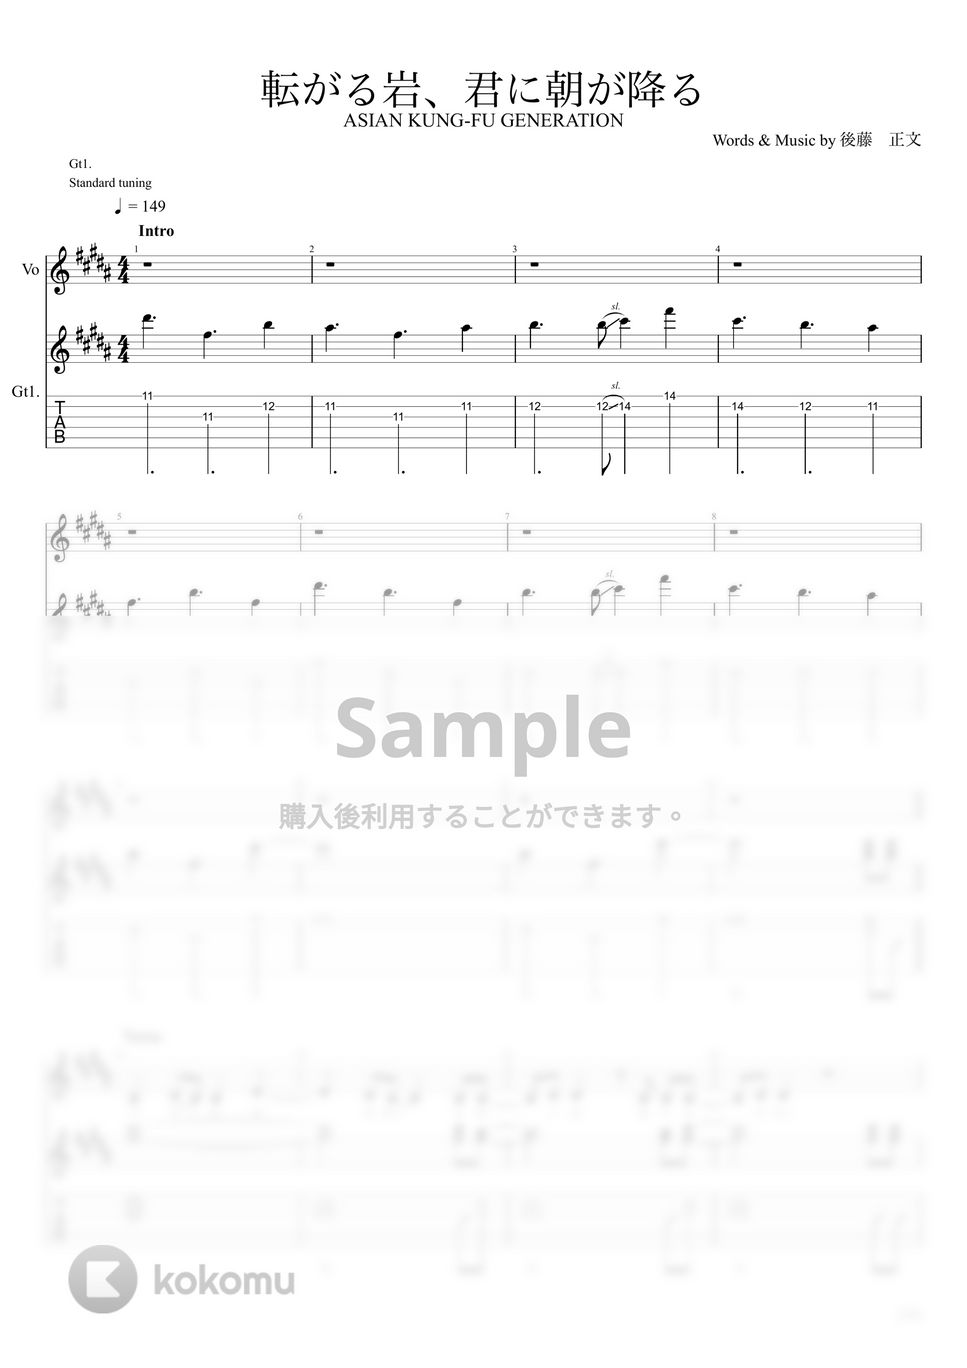 ASIAN KUNG-FU GENERATION - 転がる岩、君に朝が降る (リードギターPart) by キリギリス